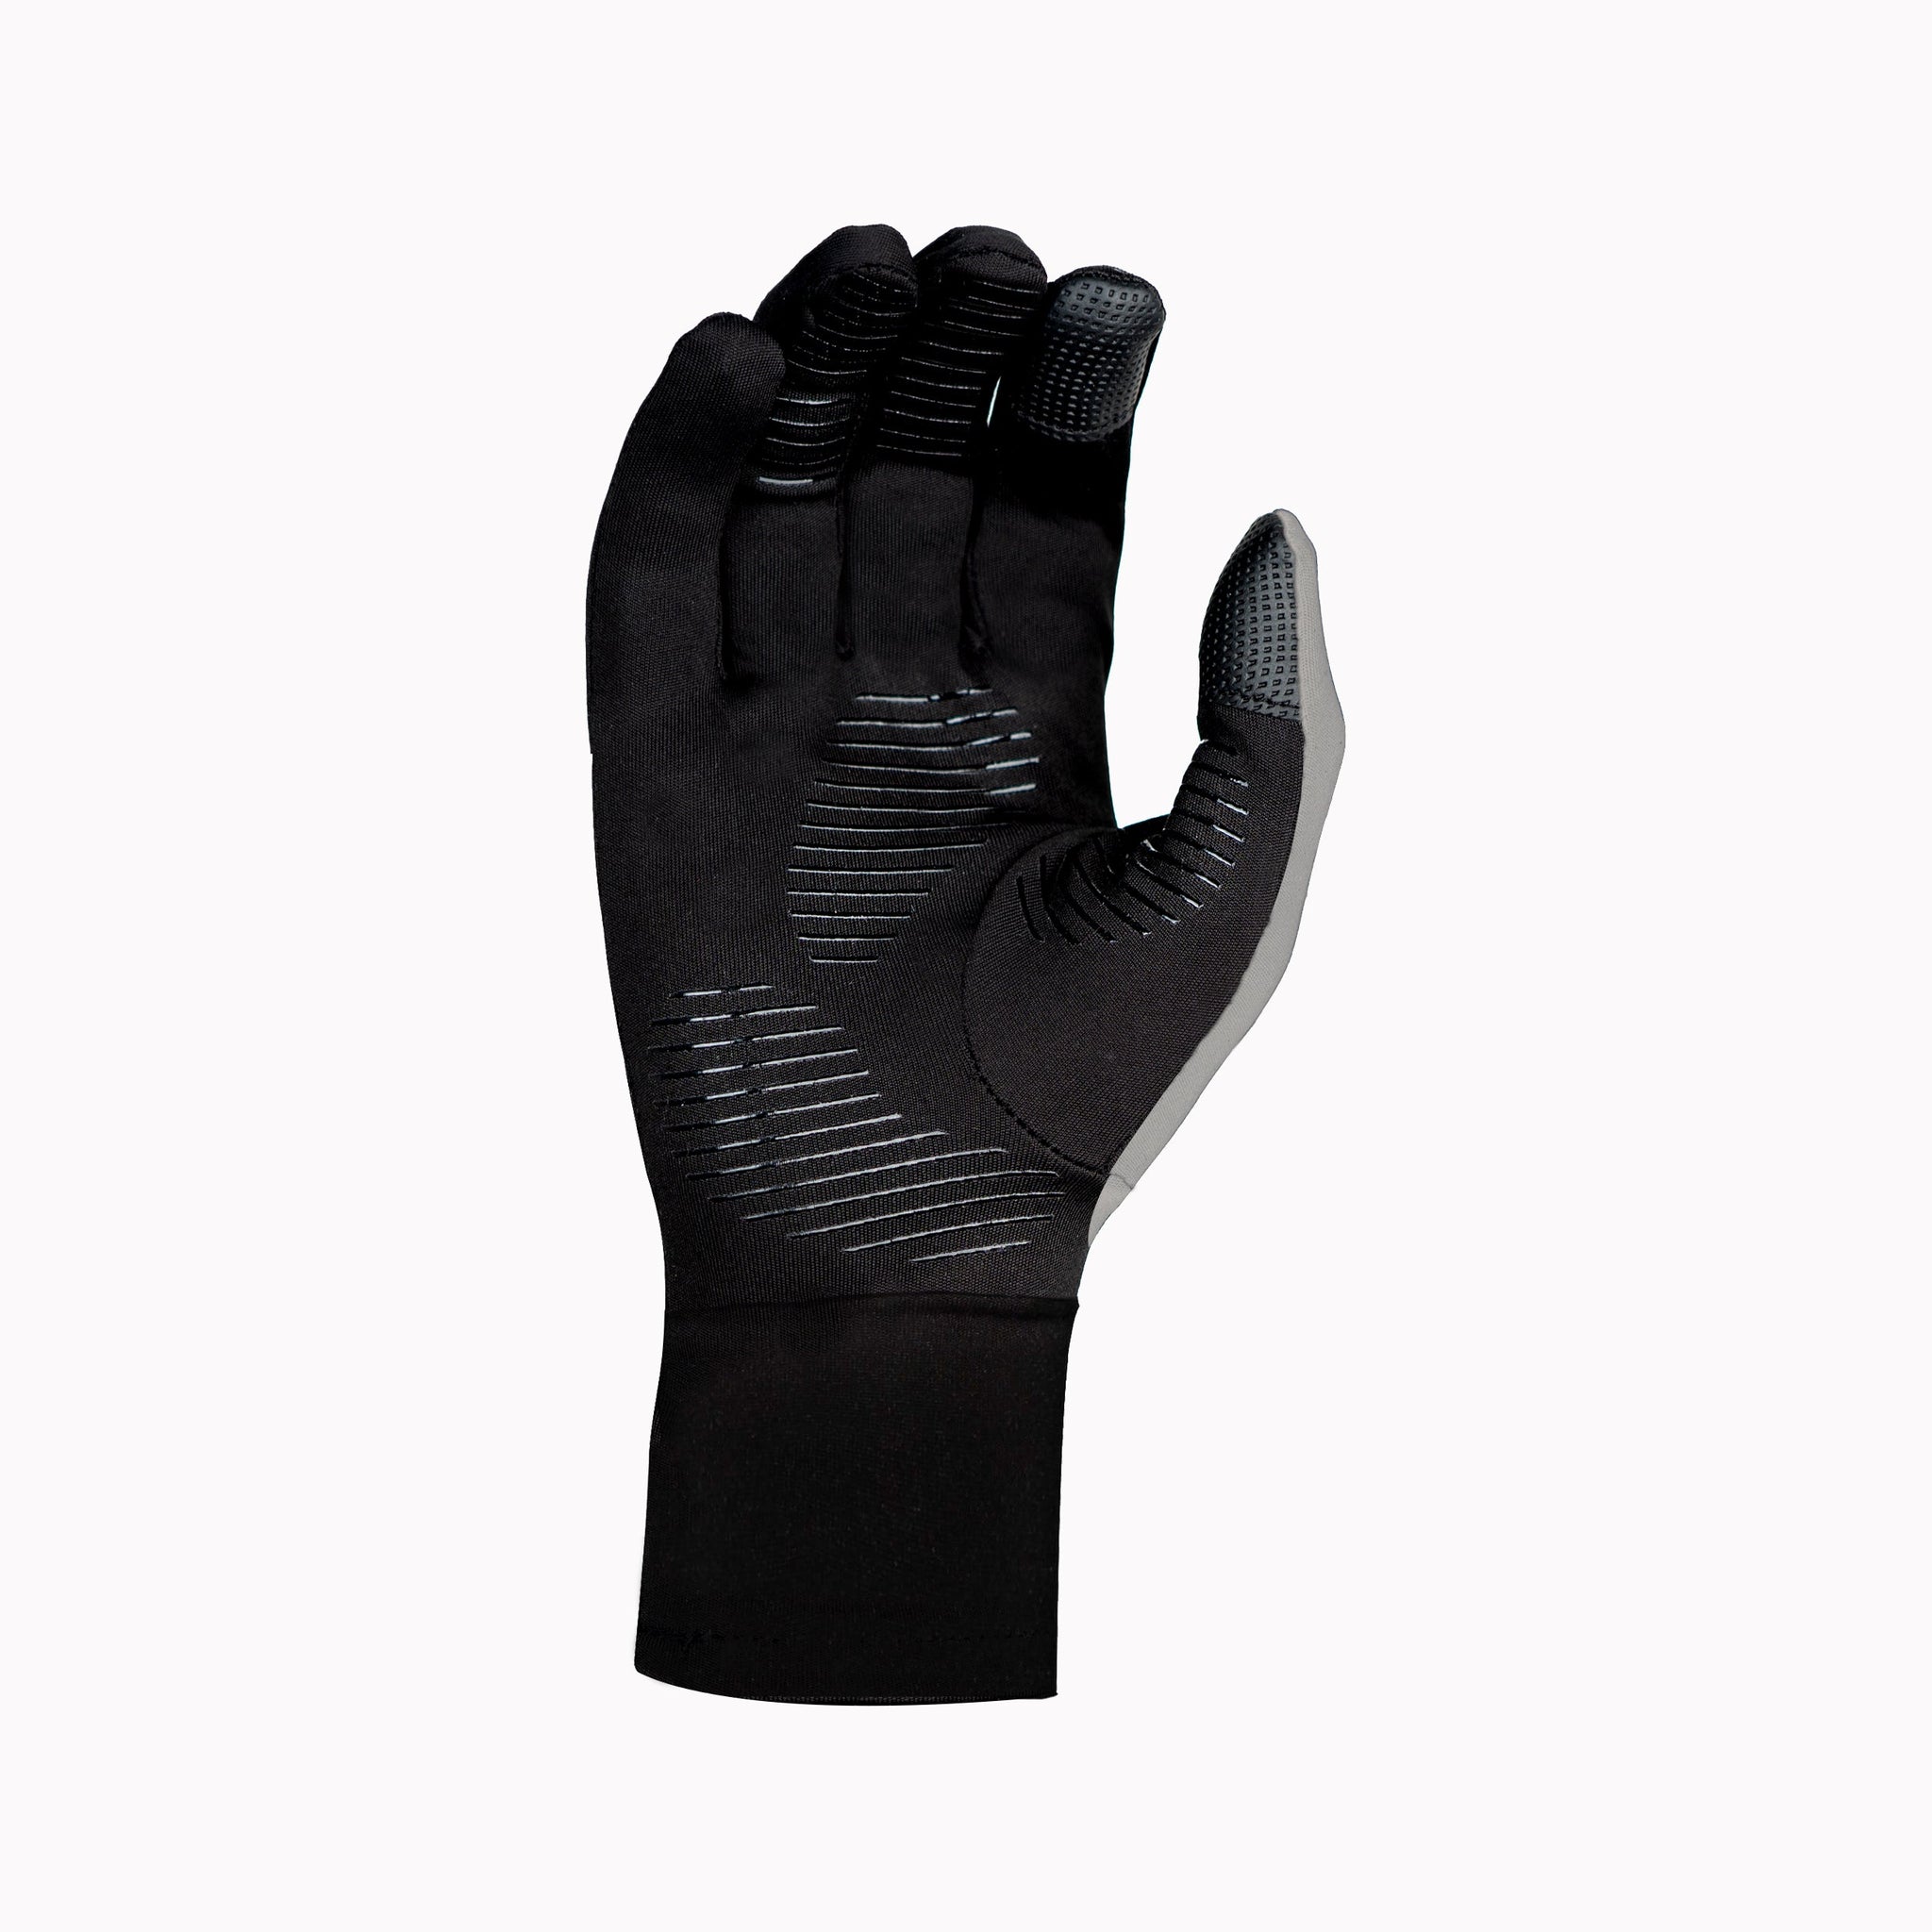 Freetrain GR1 Reflective Gloves